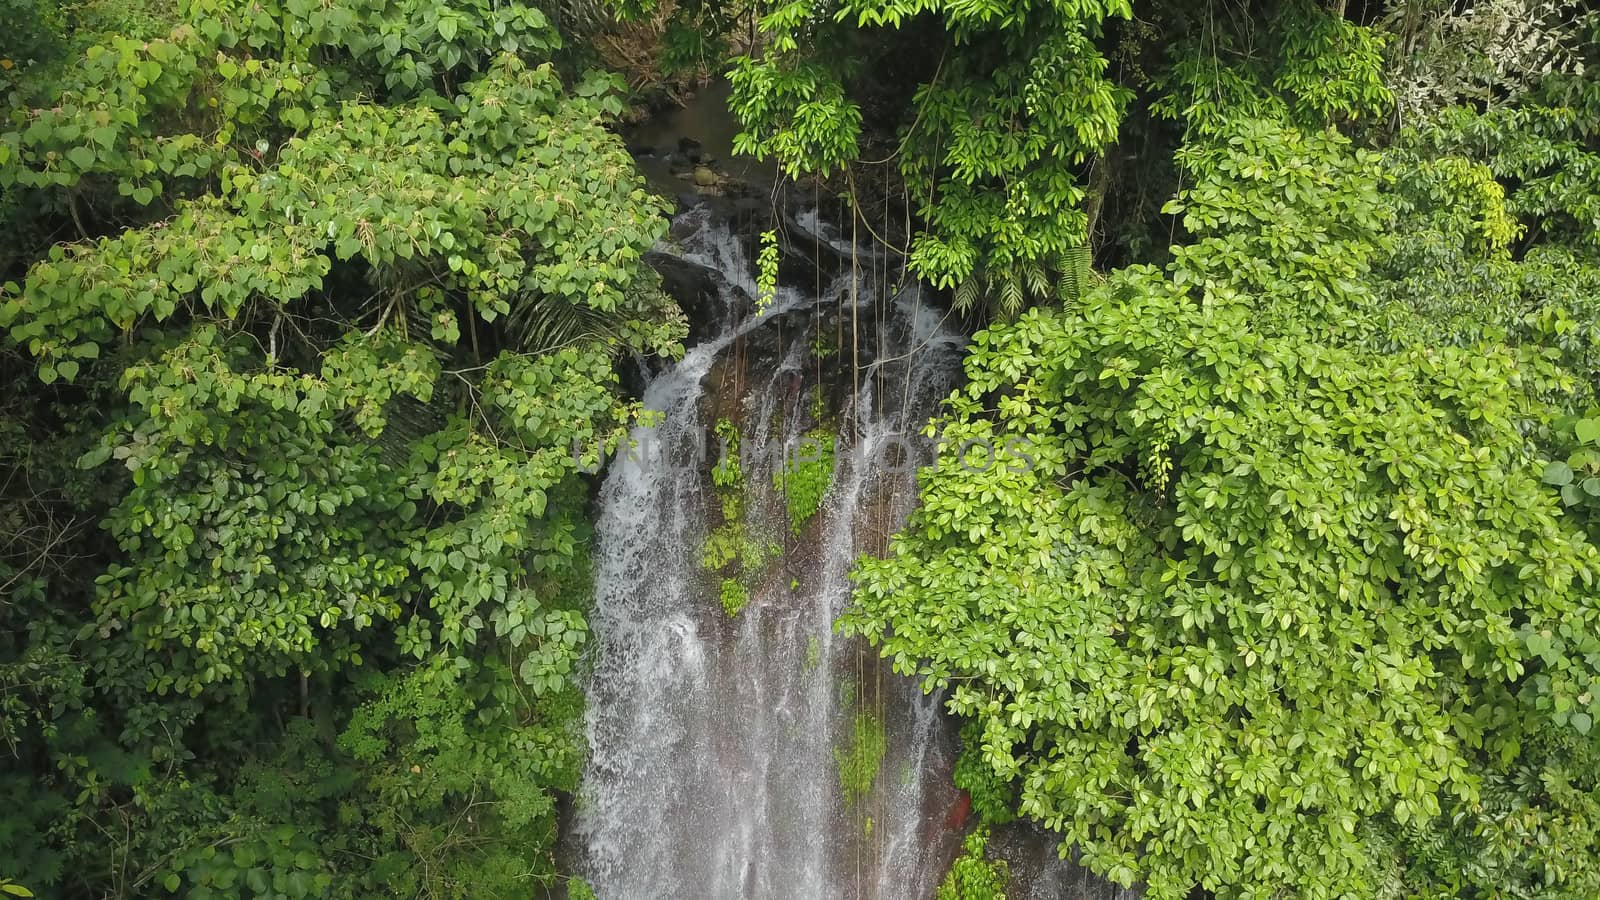 Drone View of Labuhan Kebo Waterfall located in Munduk, Bali by Sanatana2008